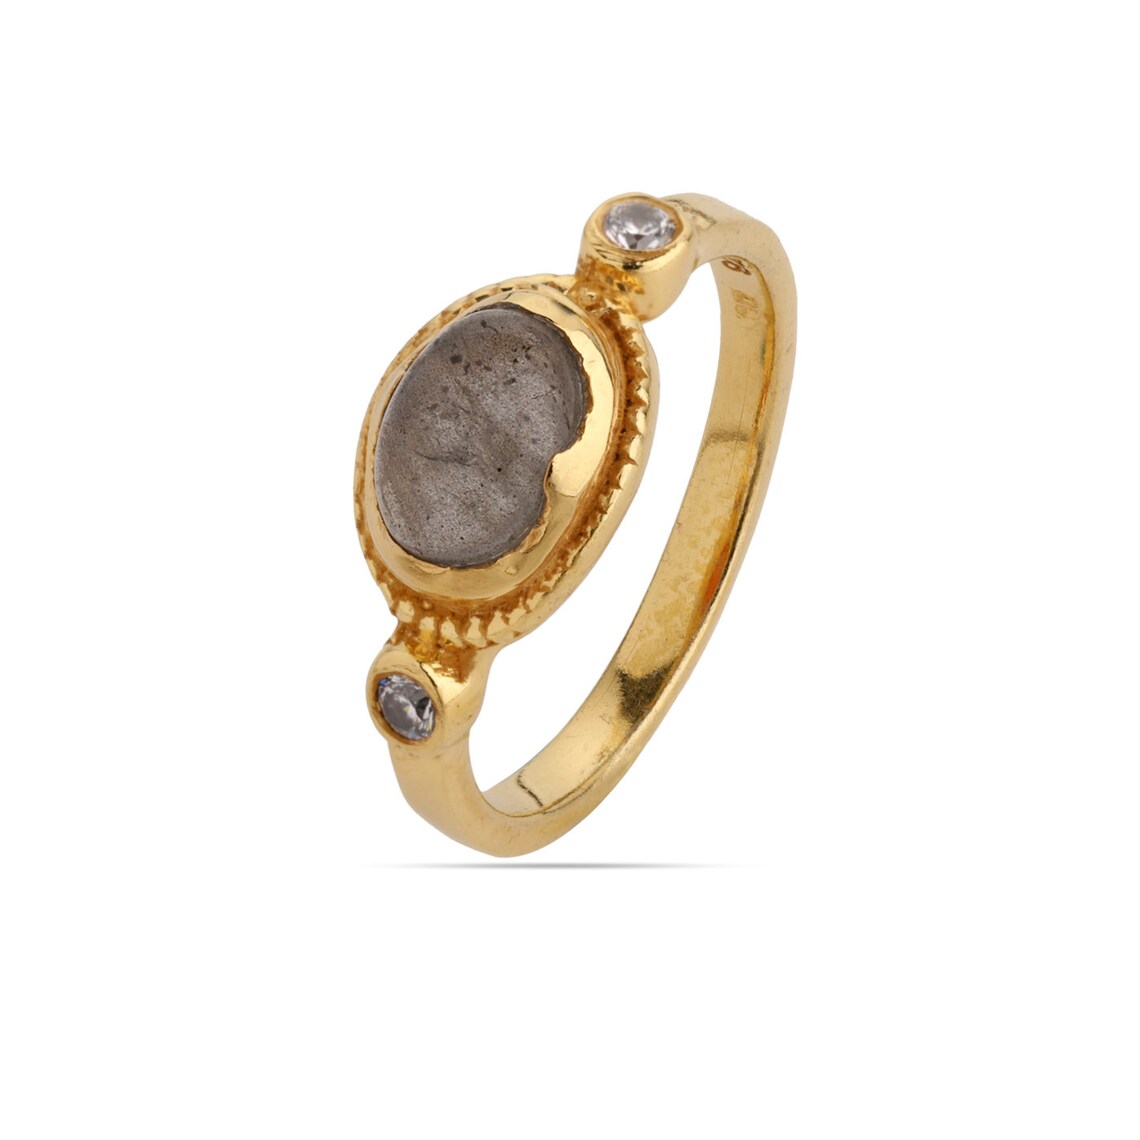 Oval Labradorite Ring, CZ Labradorite Ring, Labradorite Gold Ring, Stacking Ring, Delicate Ring, Labradorite Oval Gemstone Ring,Handmade